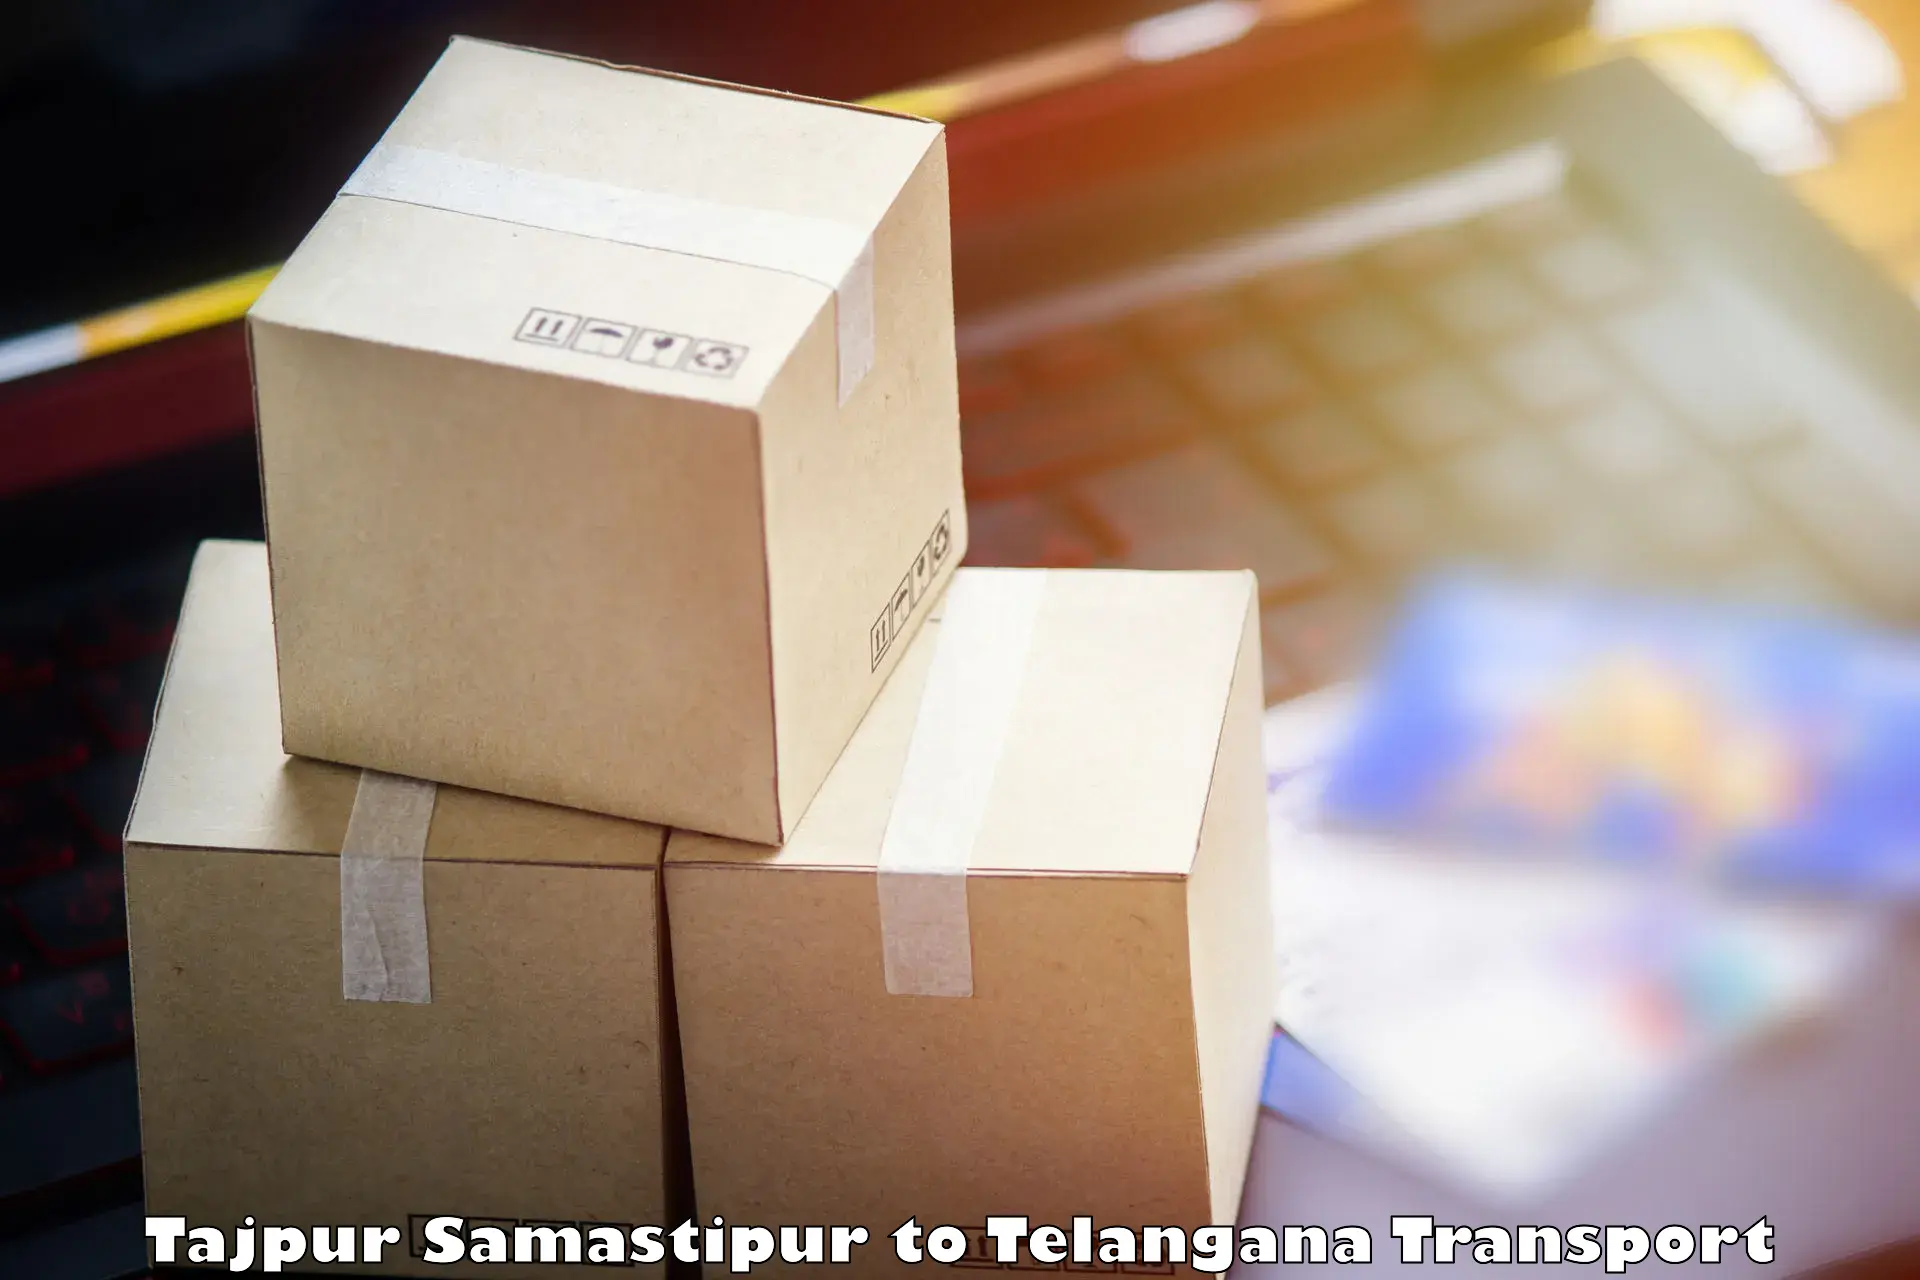 Road transport online services Tajpur Samastipur to Madhavaram